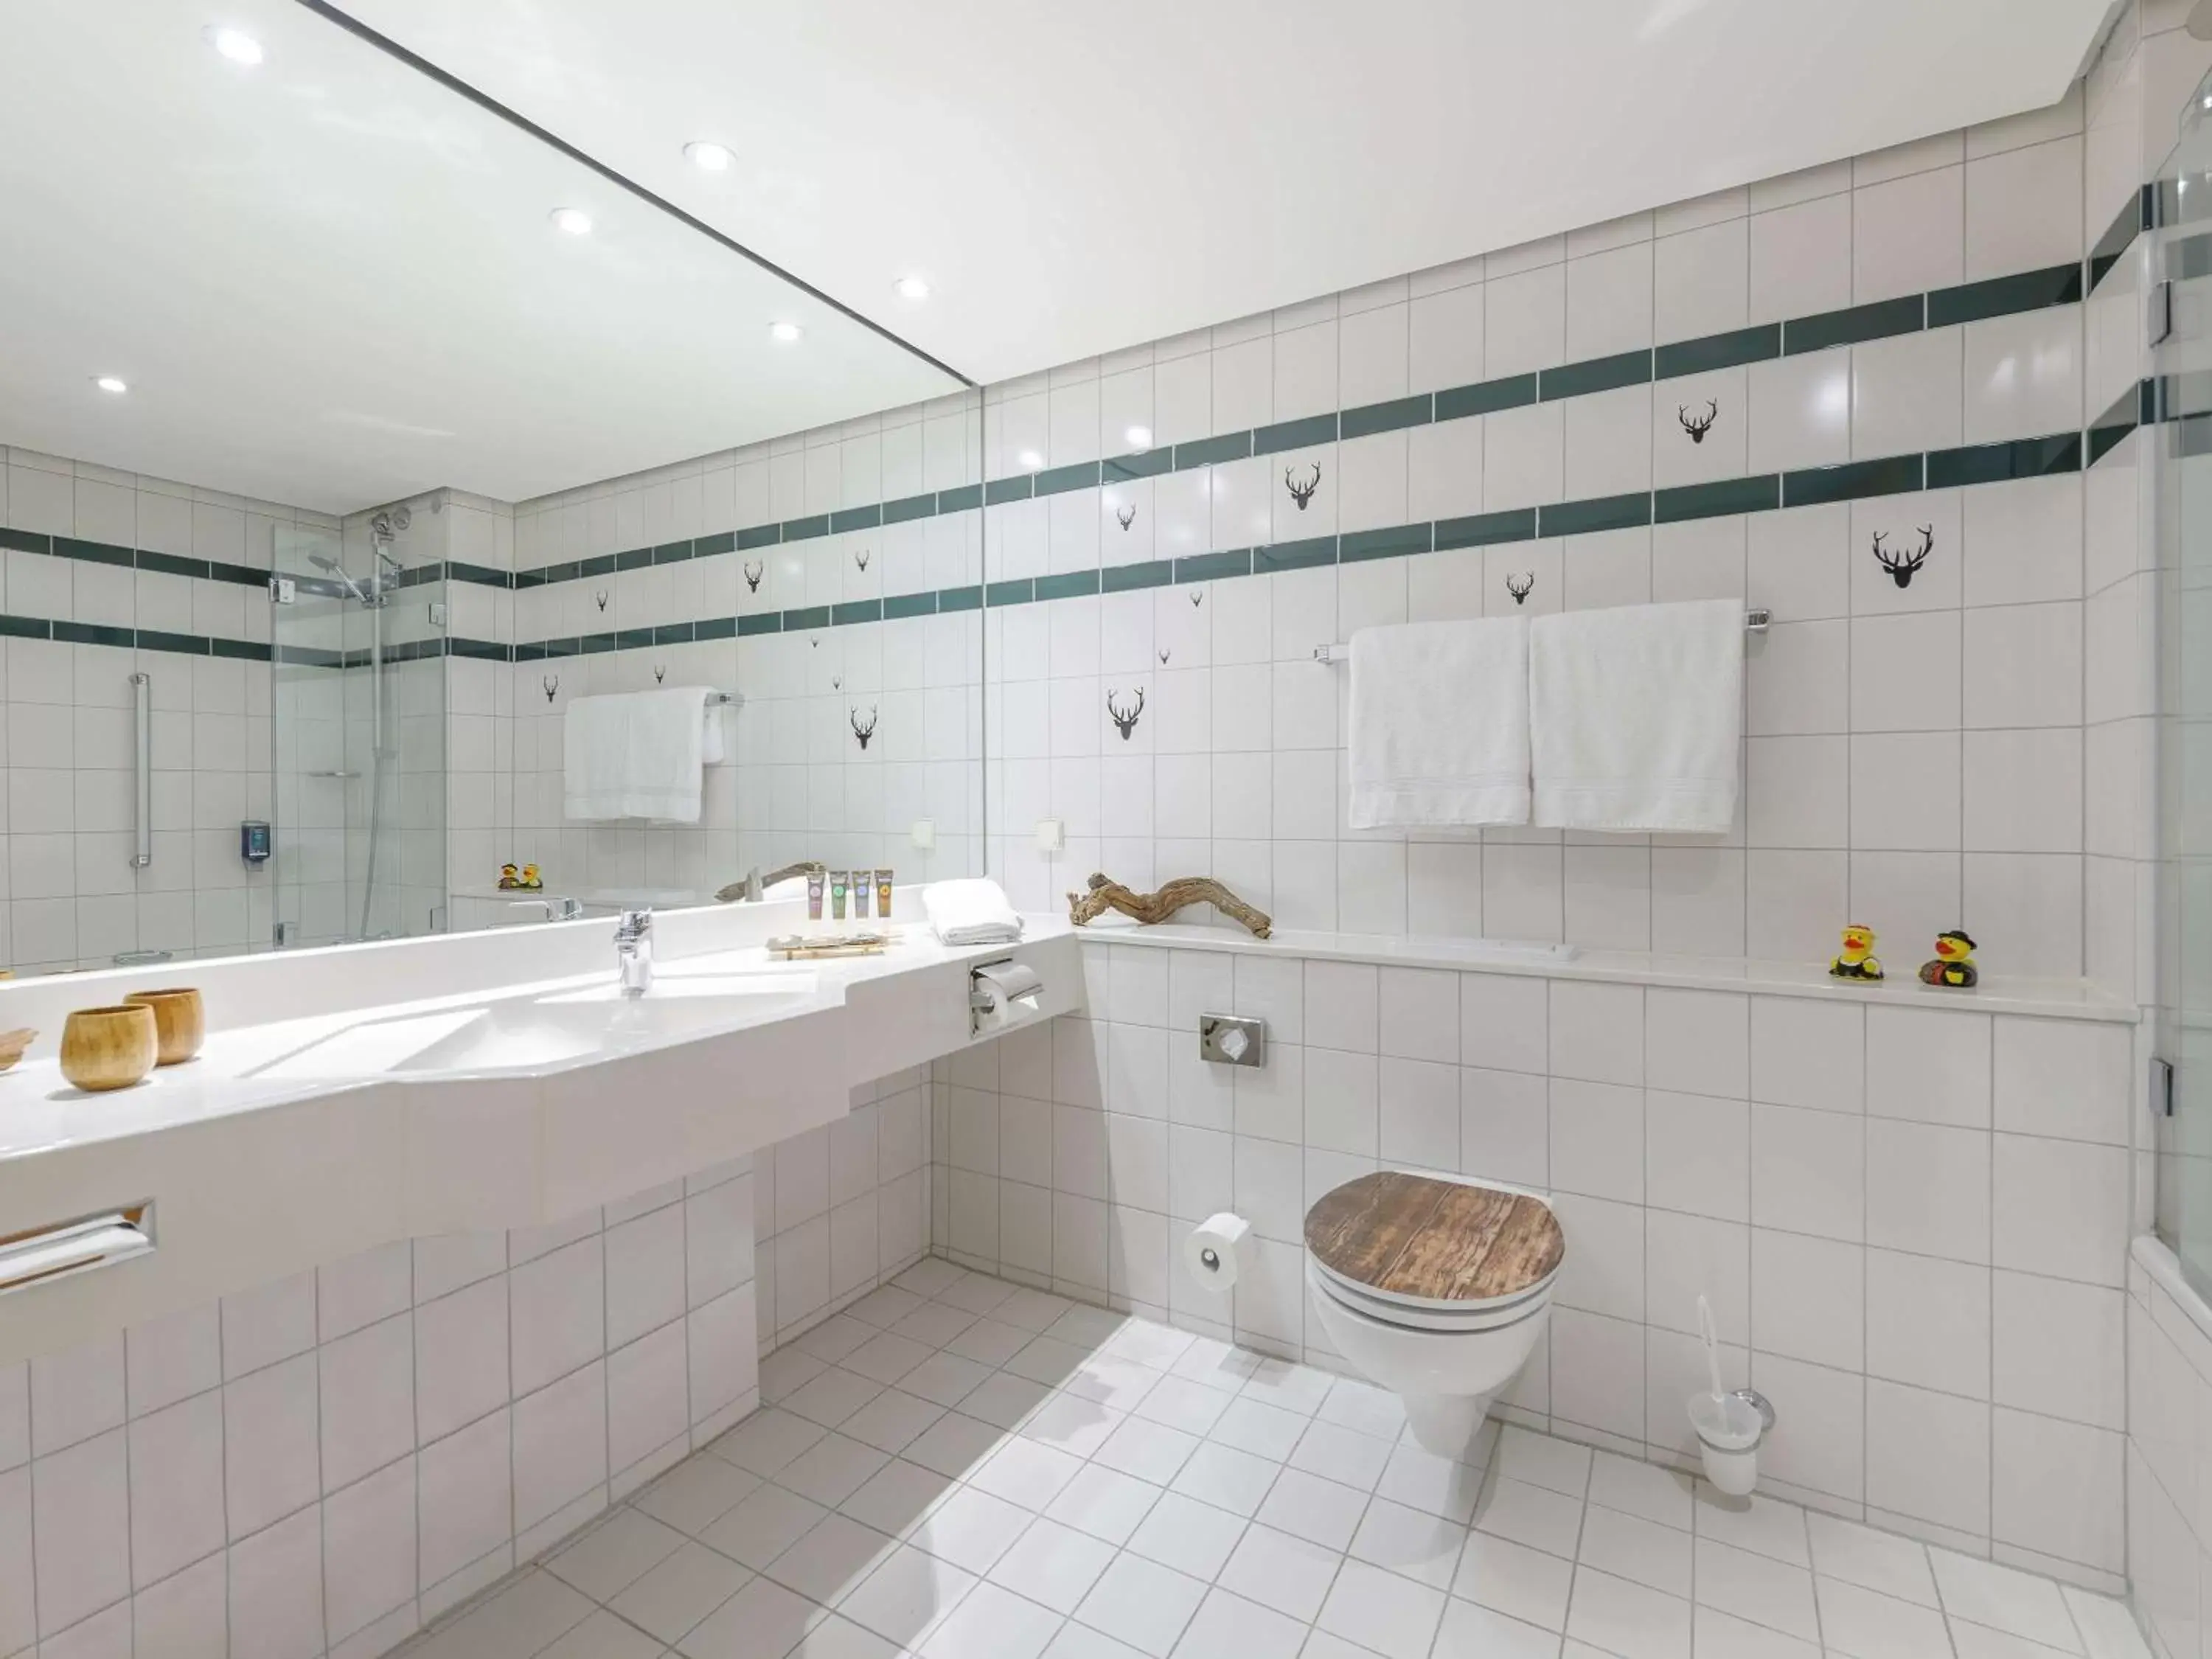 Photo of the whole room, Bathroom in Novotel Freiburg am Konzerthaus